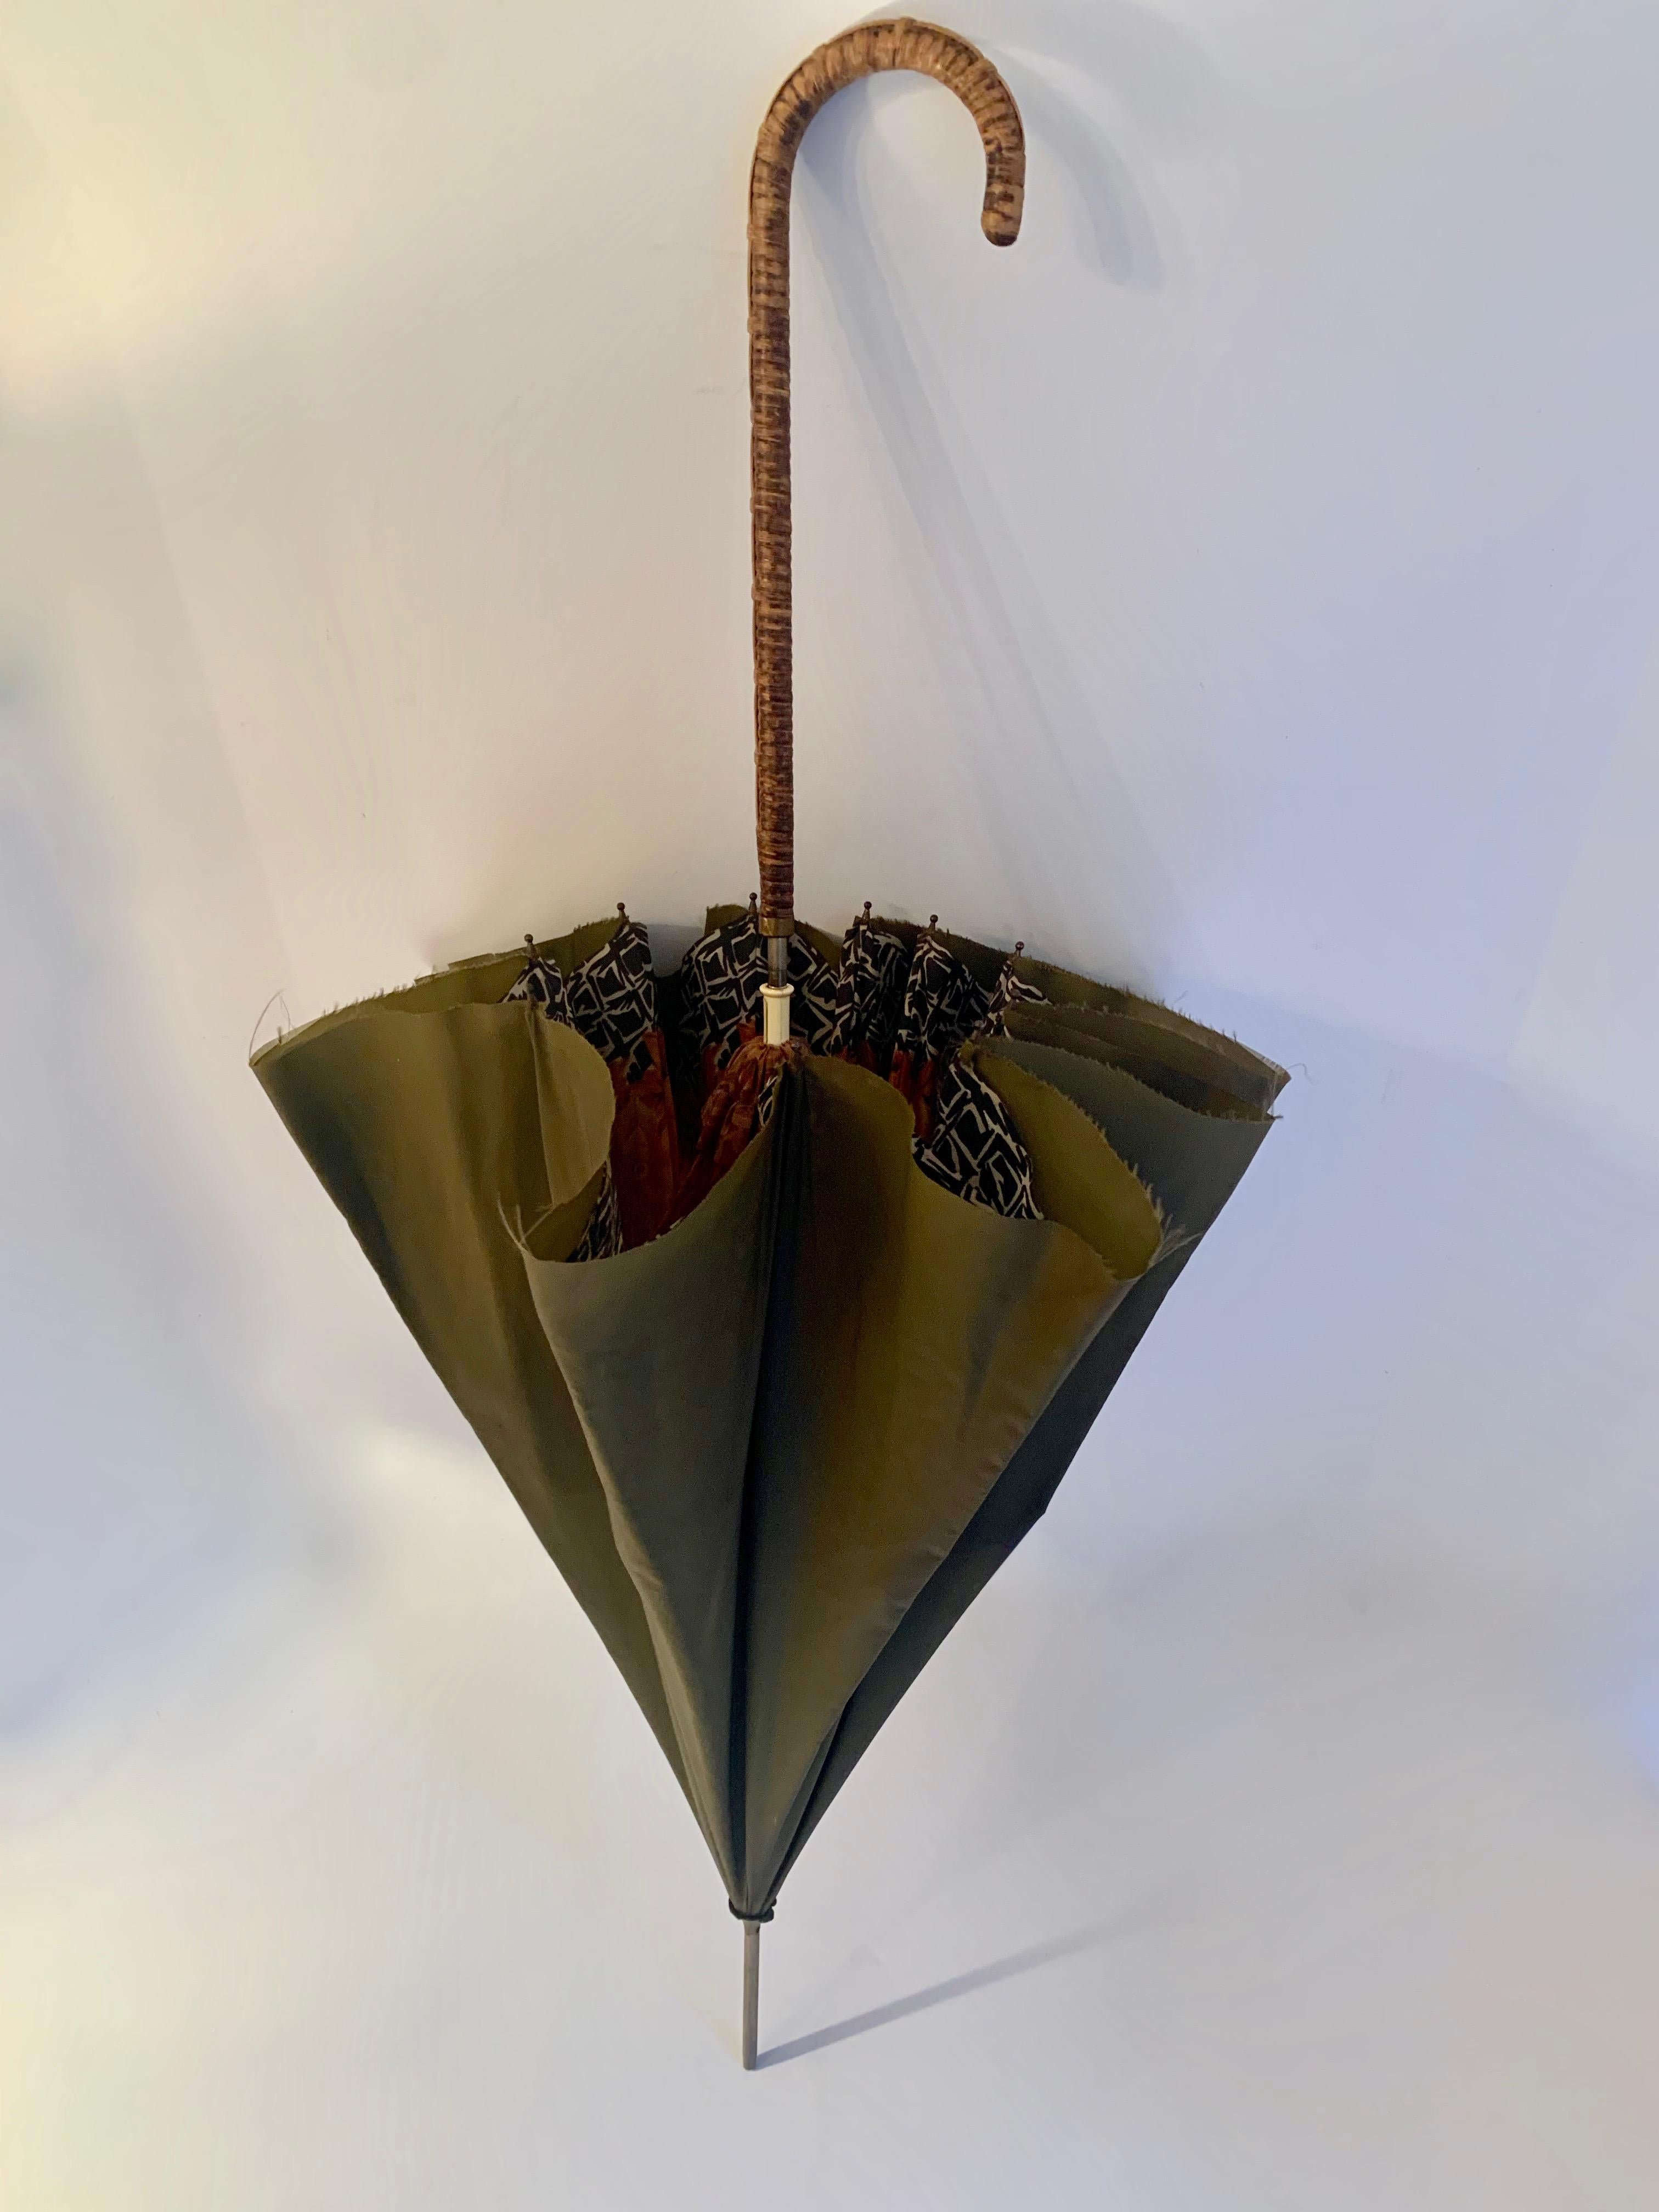 Victorian Umbrella with Cane Handle 12